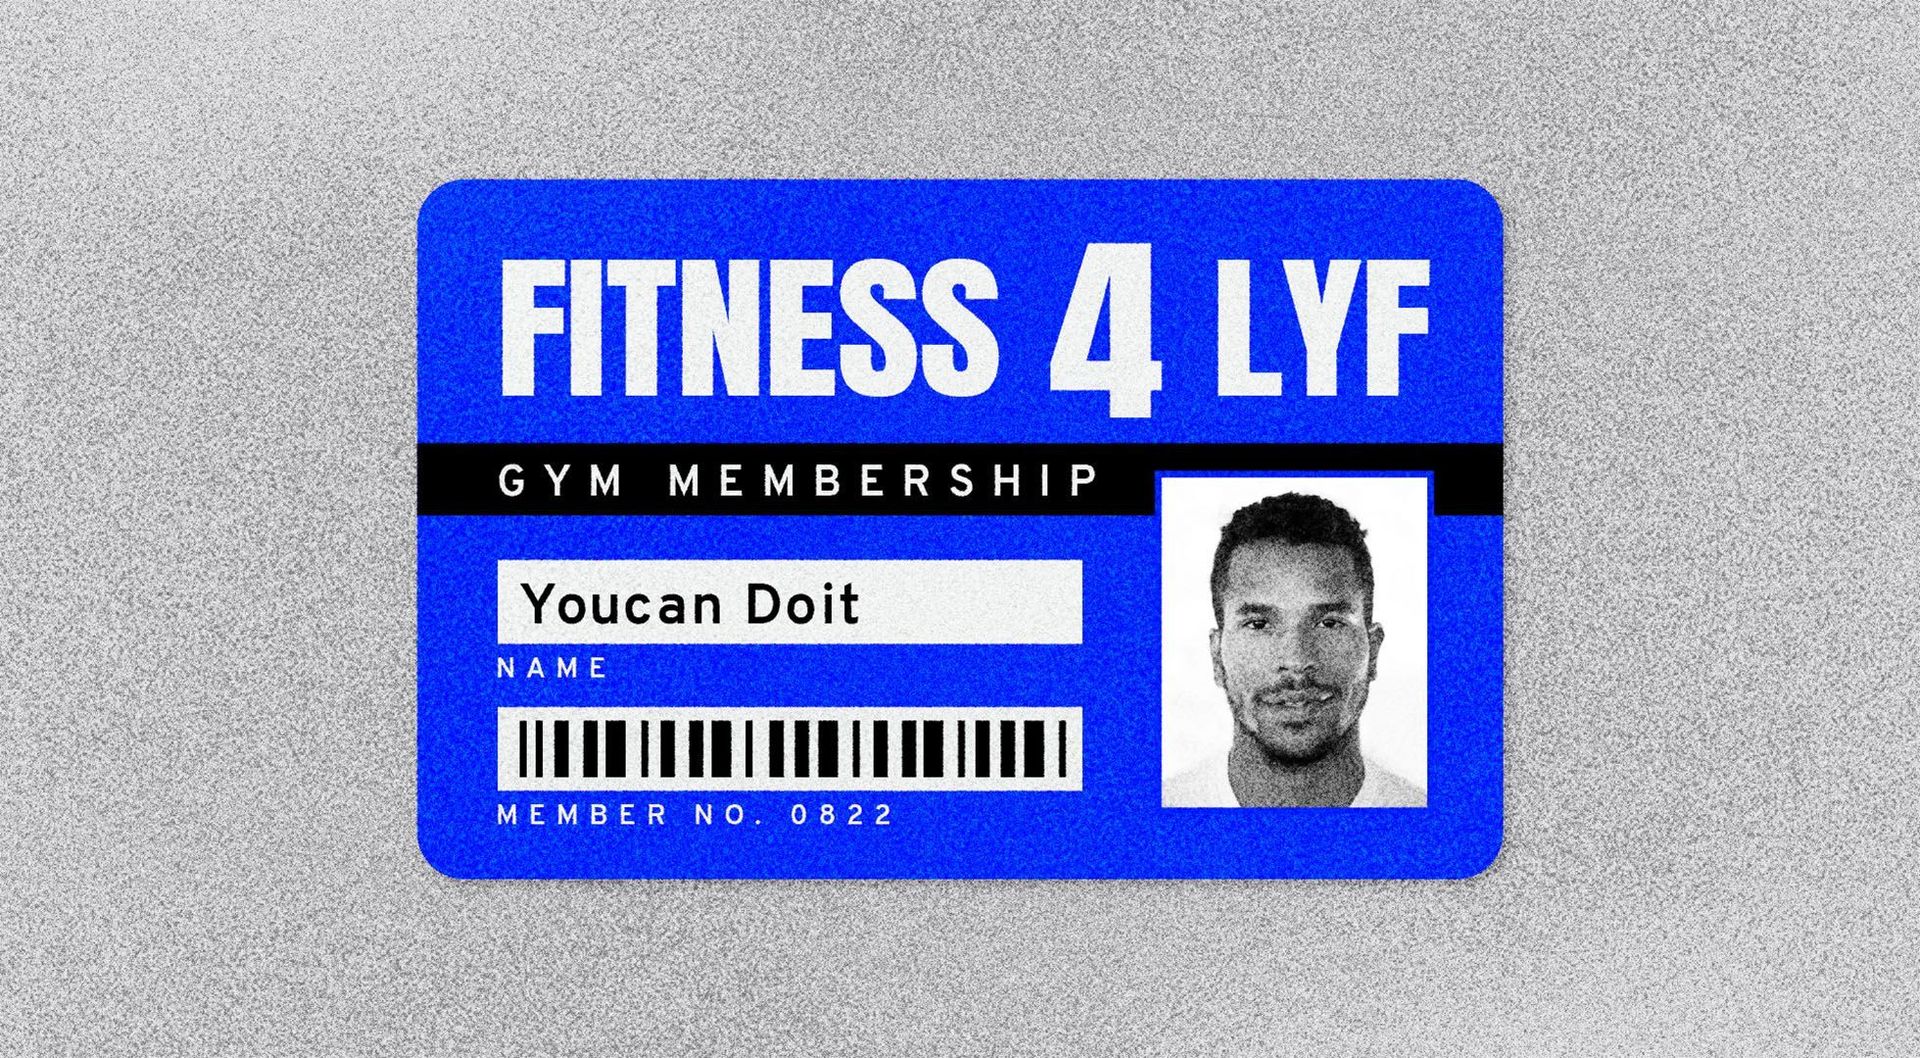 Stylised gym card saying "Fitness 4 Lyfe"